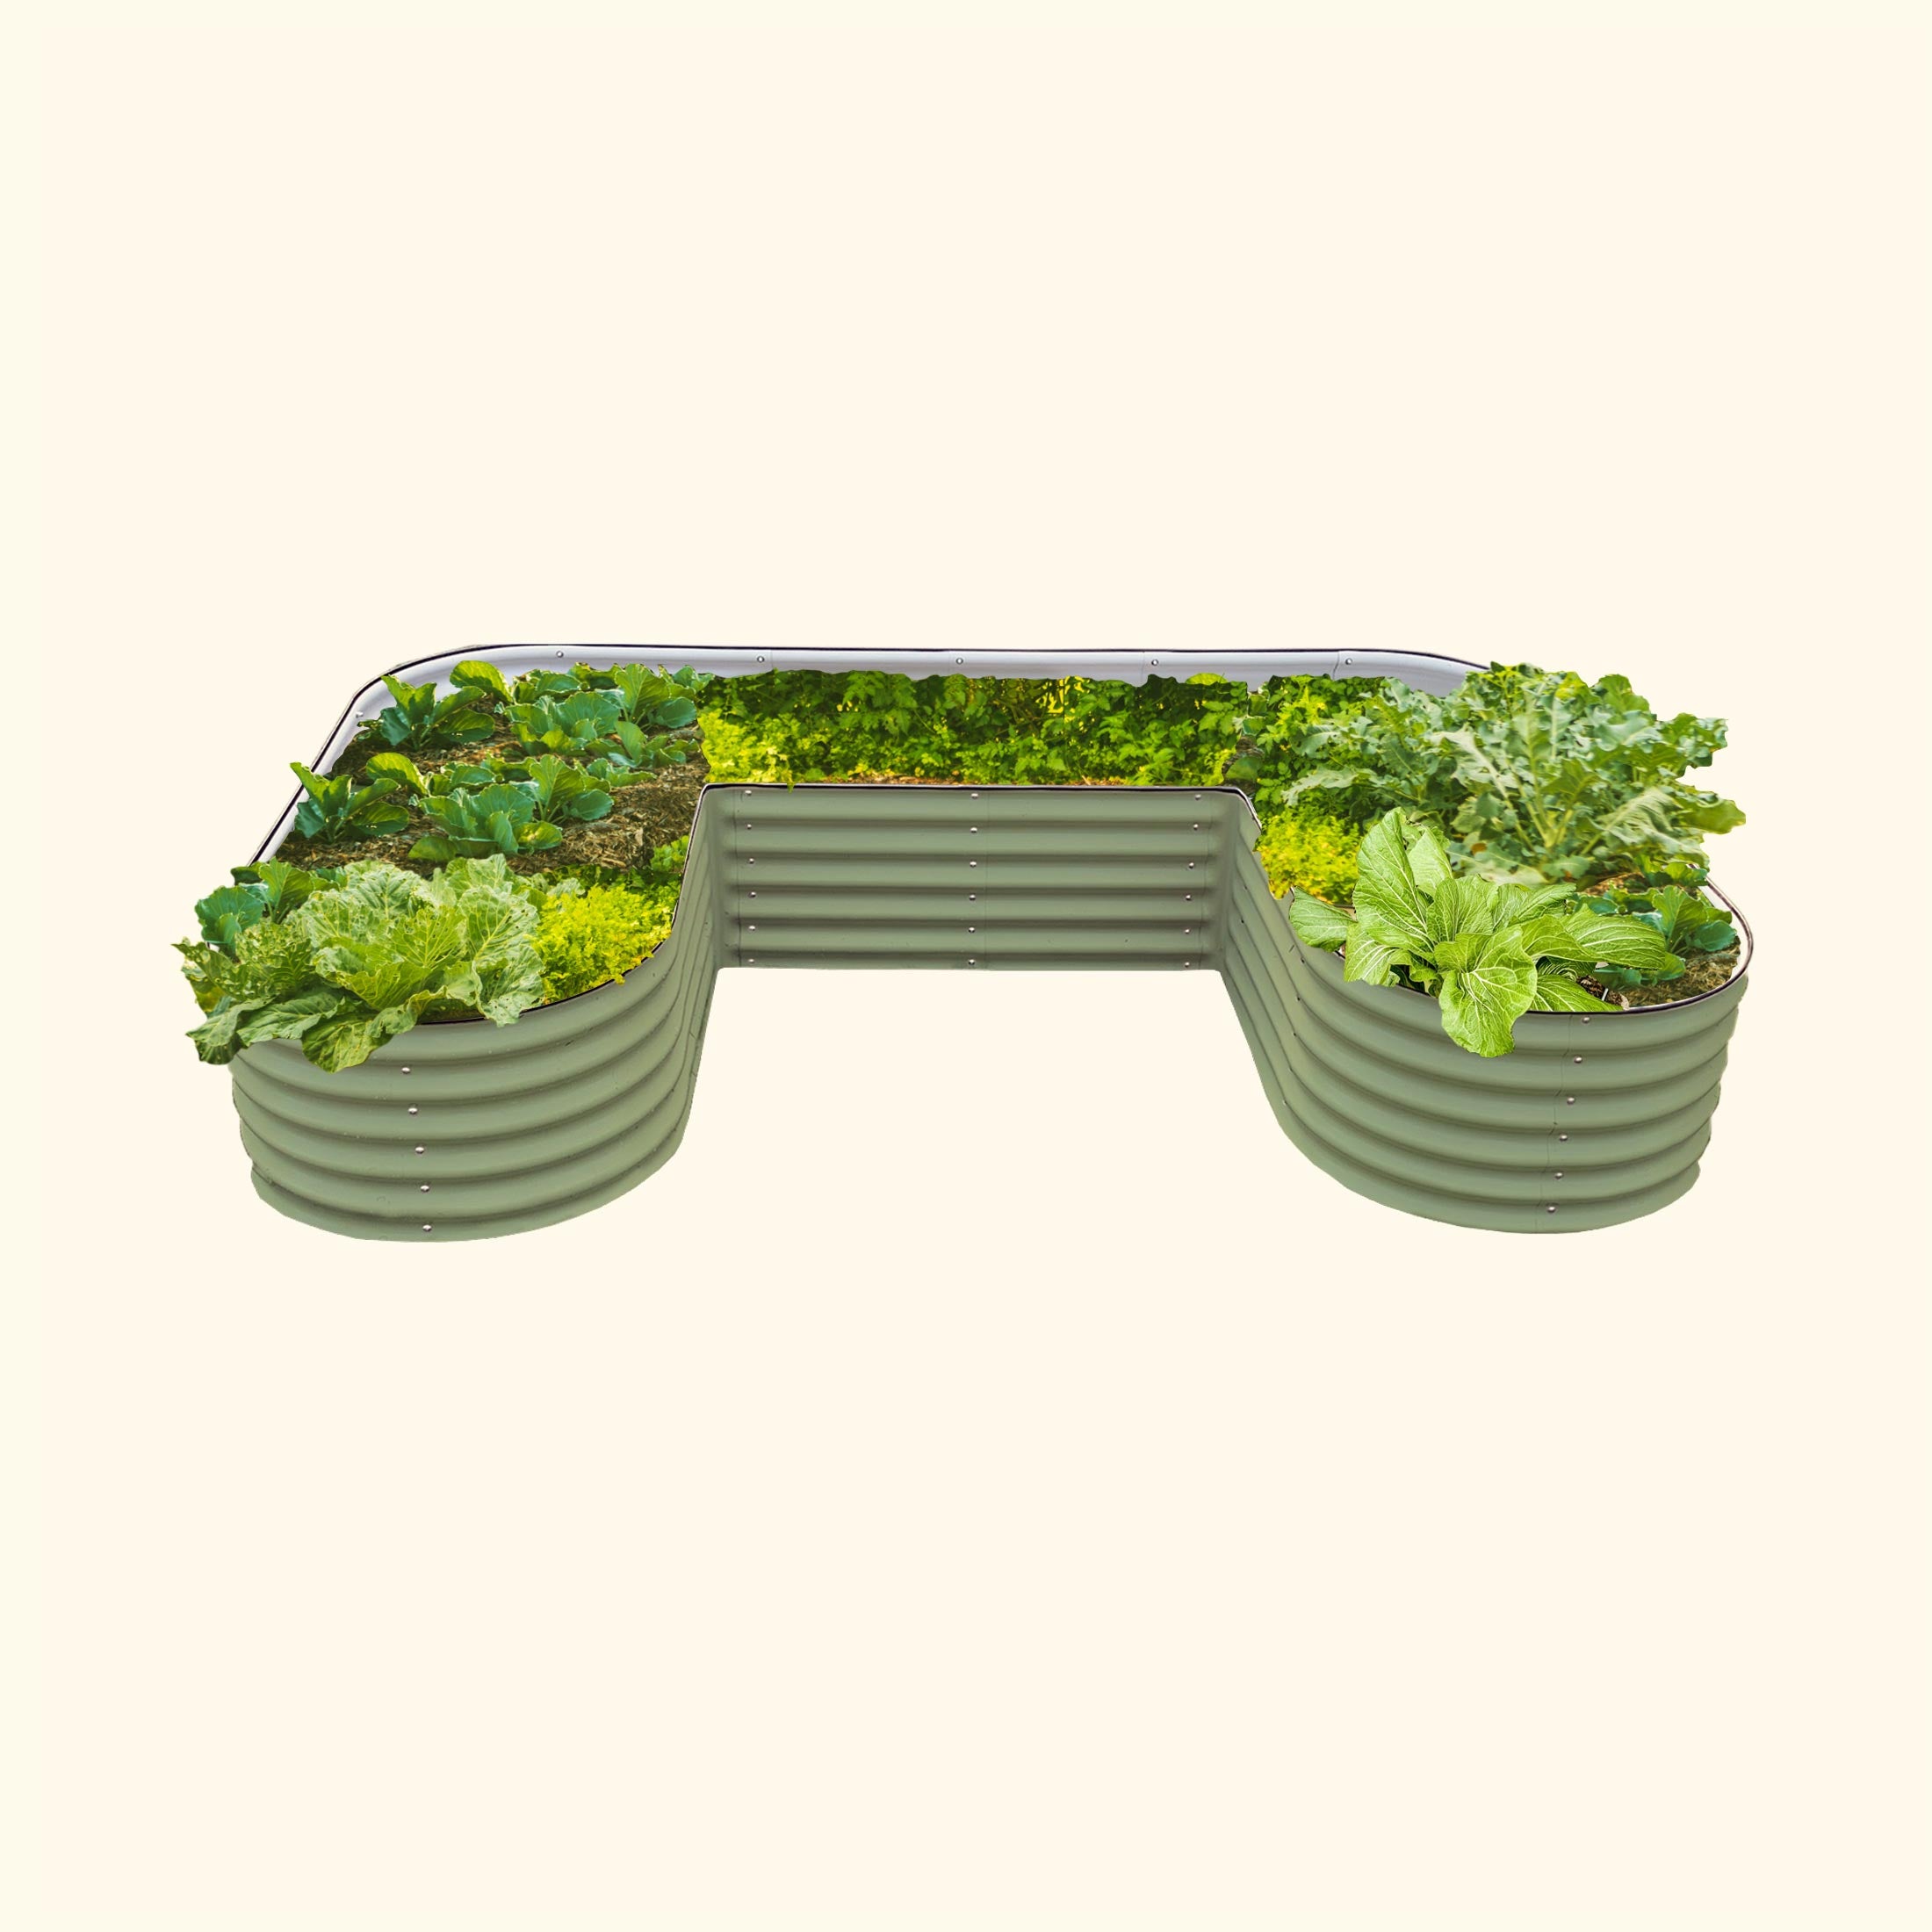 17 tall U-shaped metal garden container - Standard Size | Olive Green | Vego Garden raised garden bed